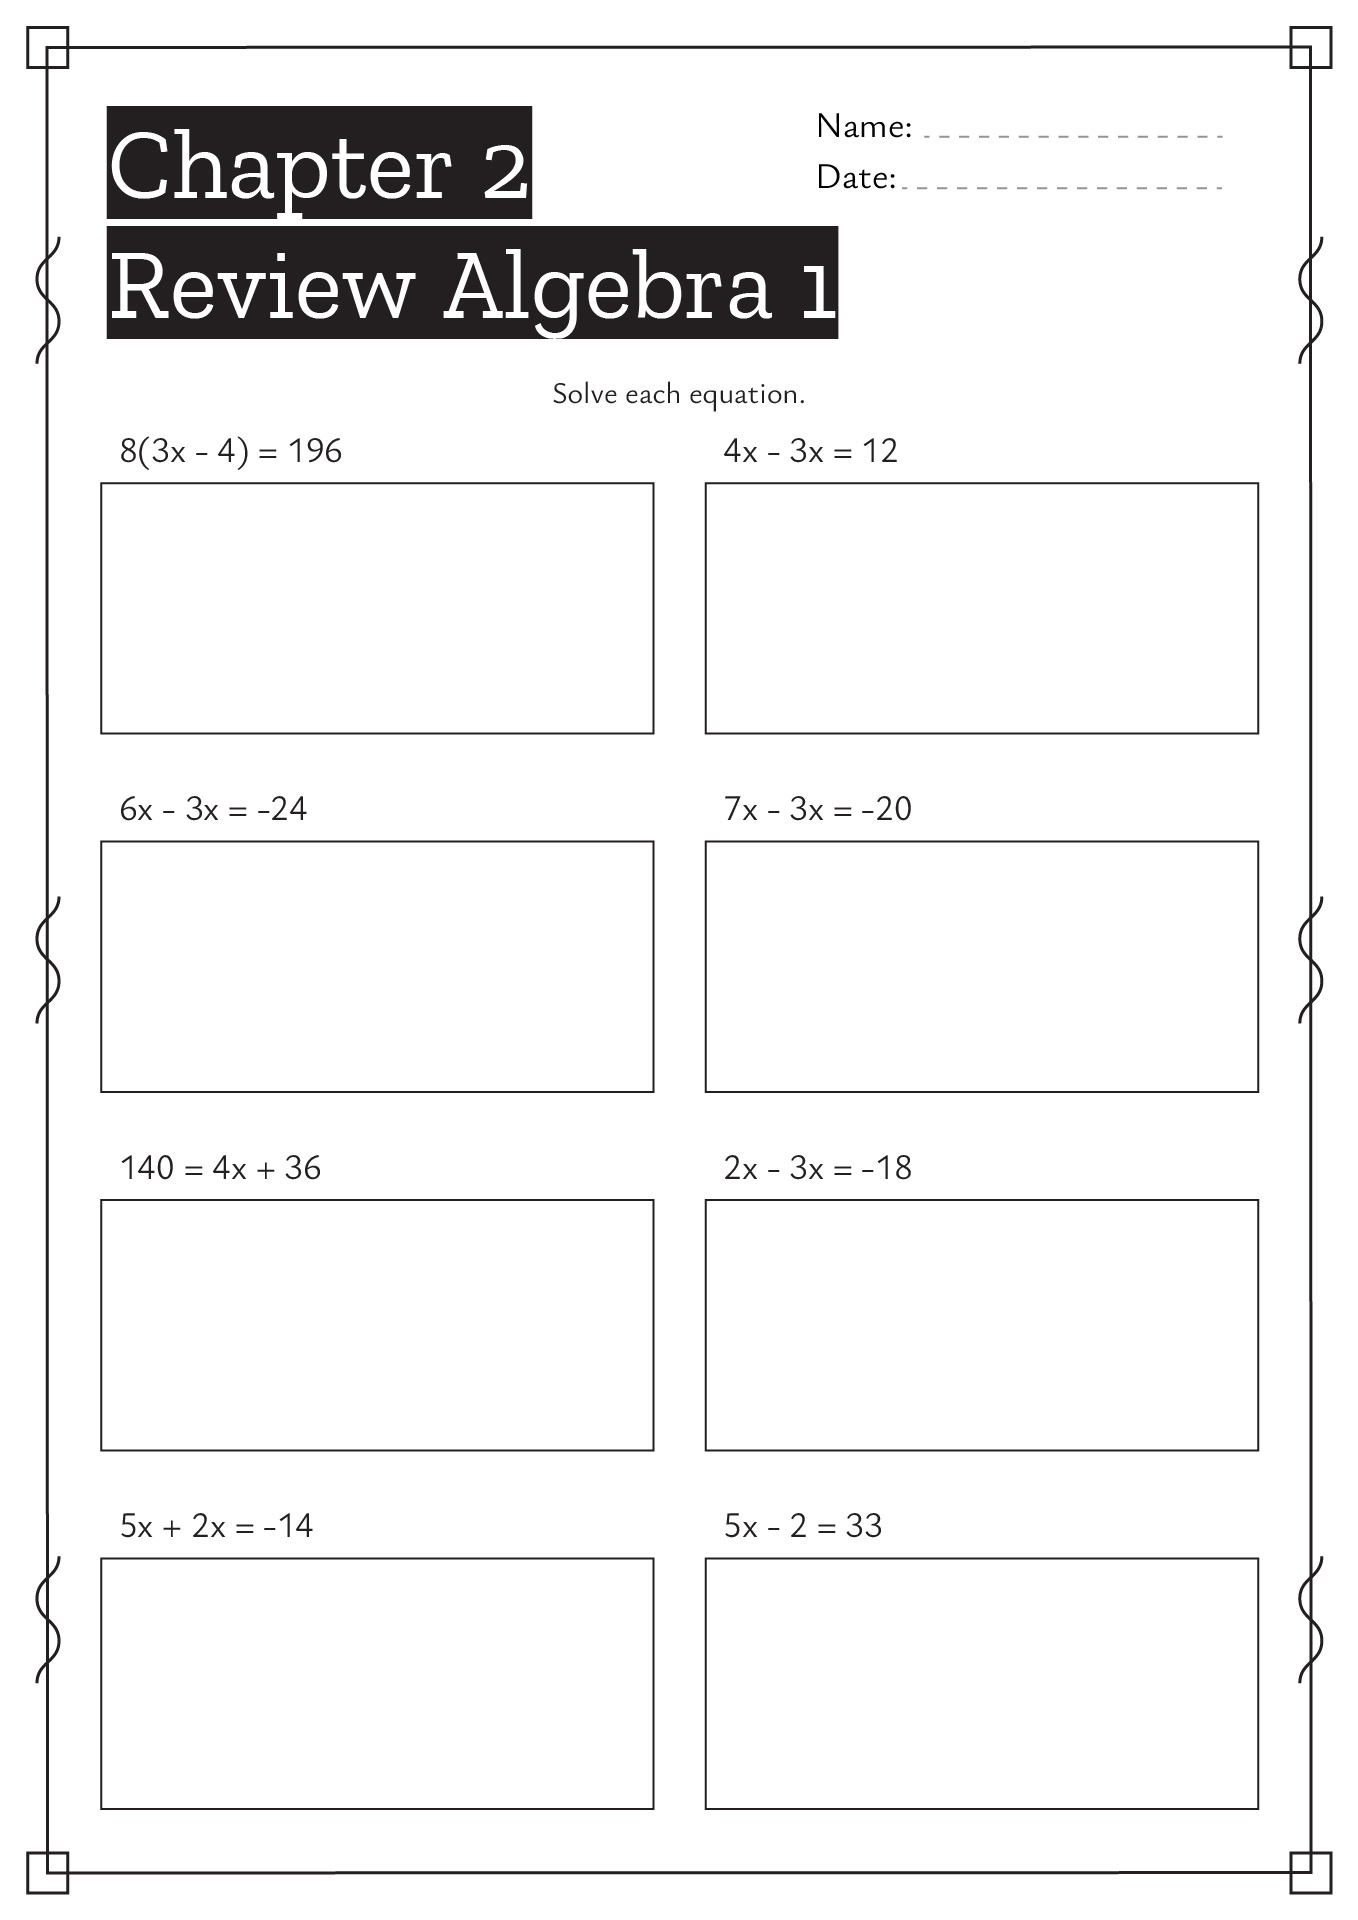 Chapter 2 Review Algebra 1 Worksheet